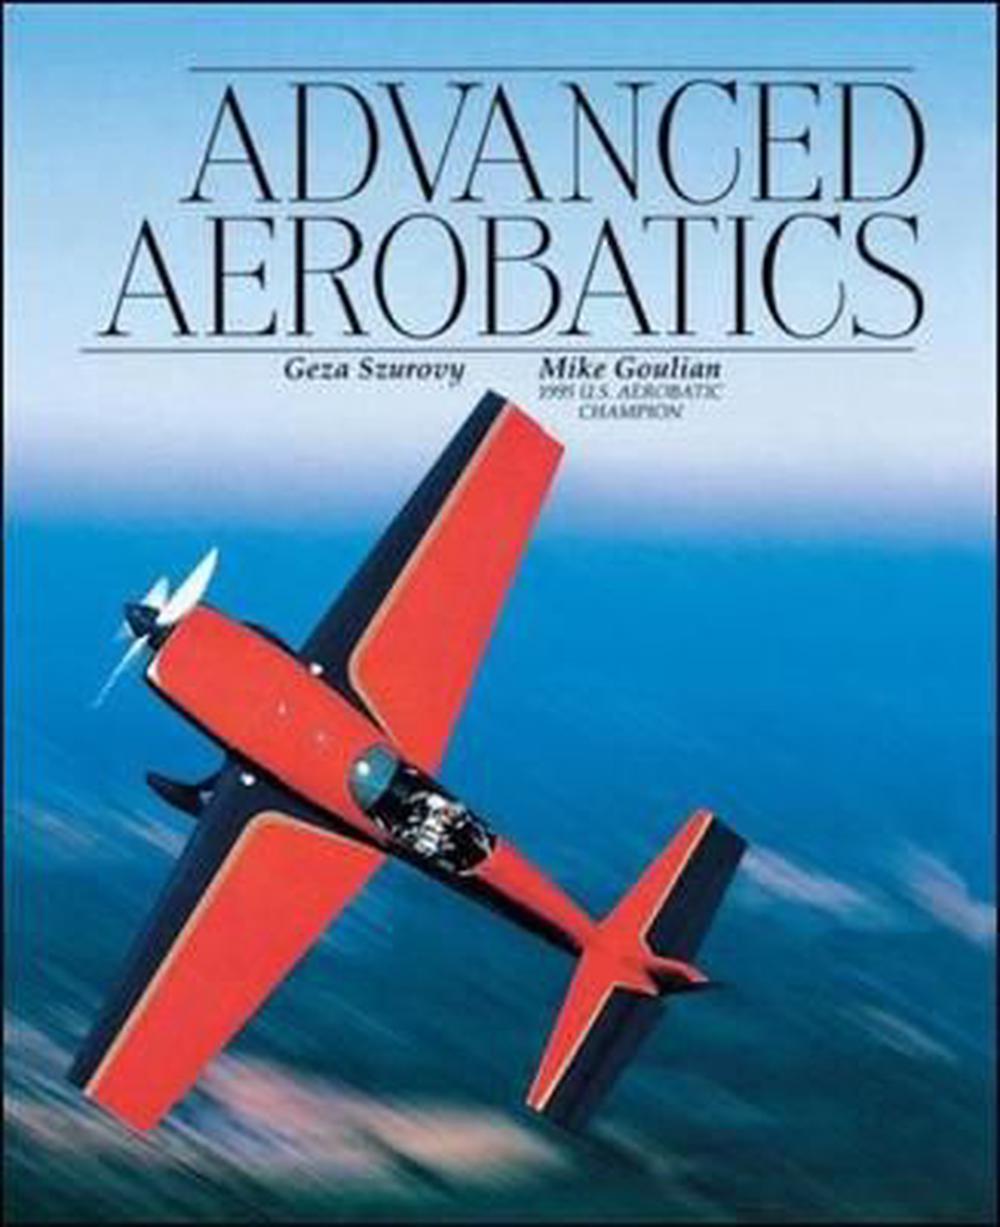 Advanced Aerobatics - by Geza Szurovy & Mike Goulian